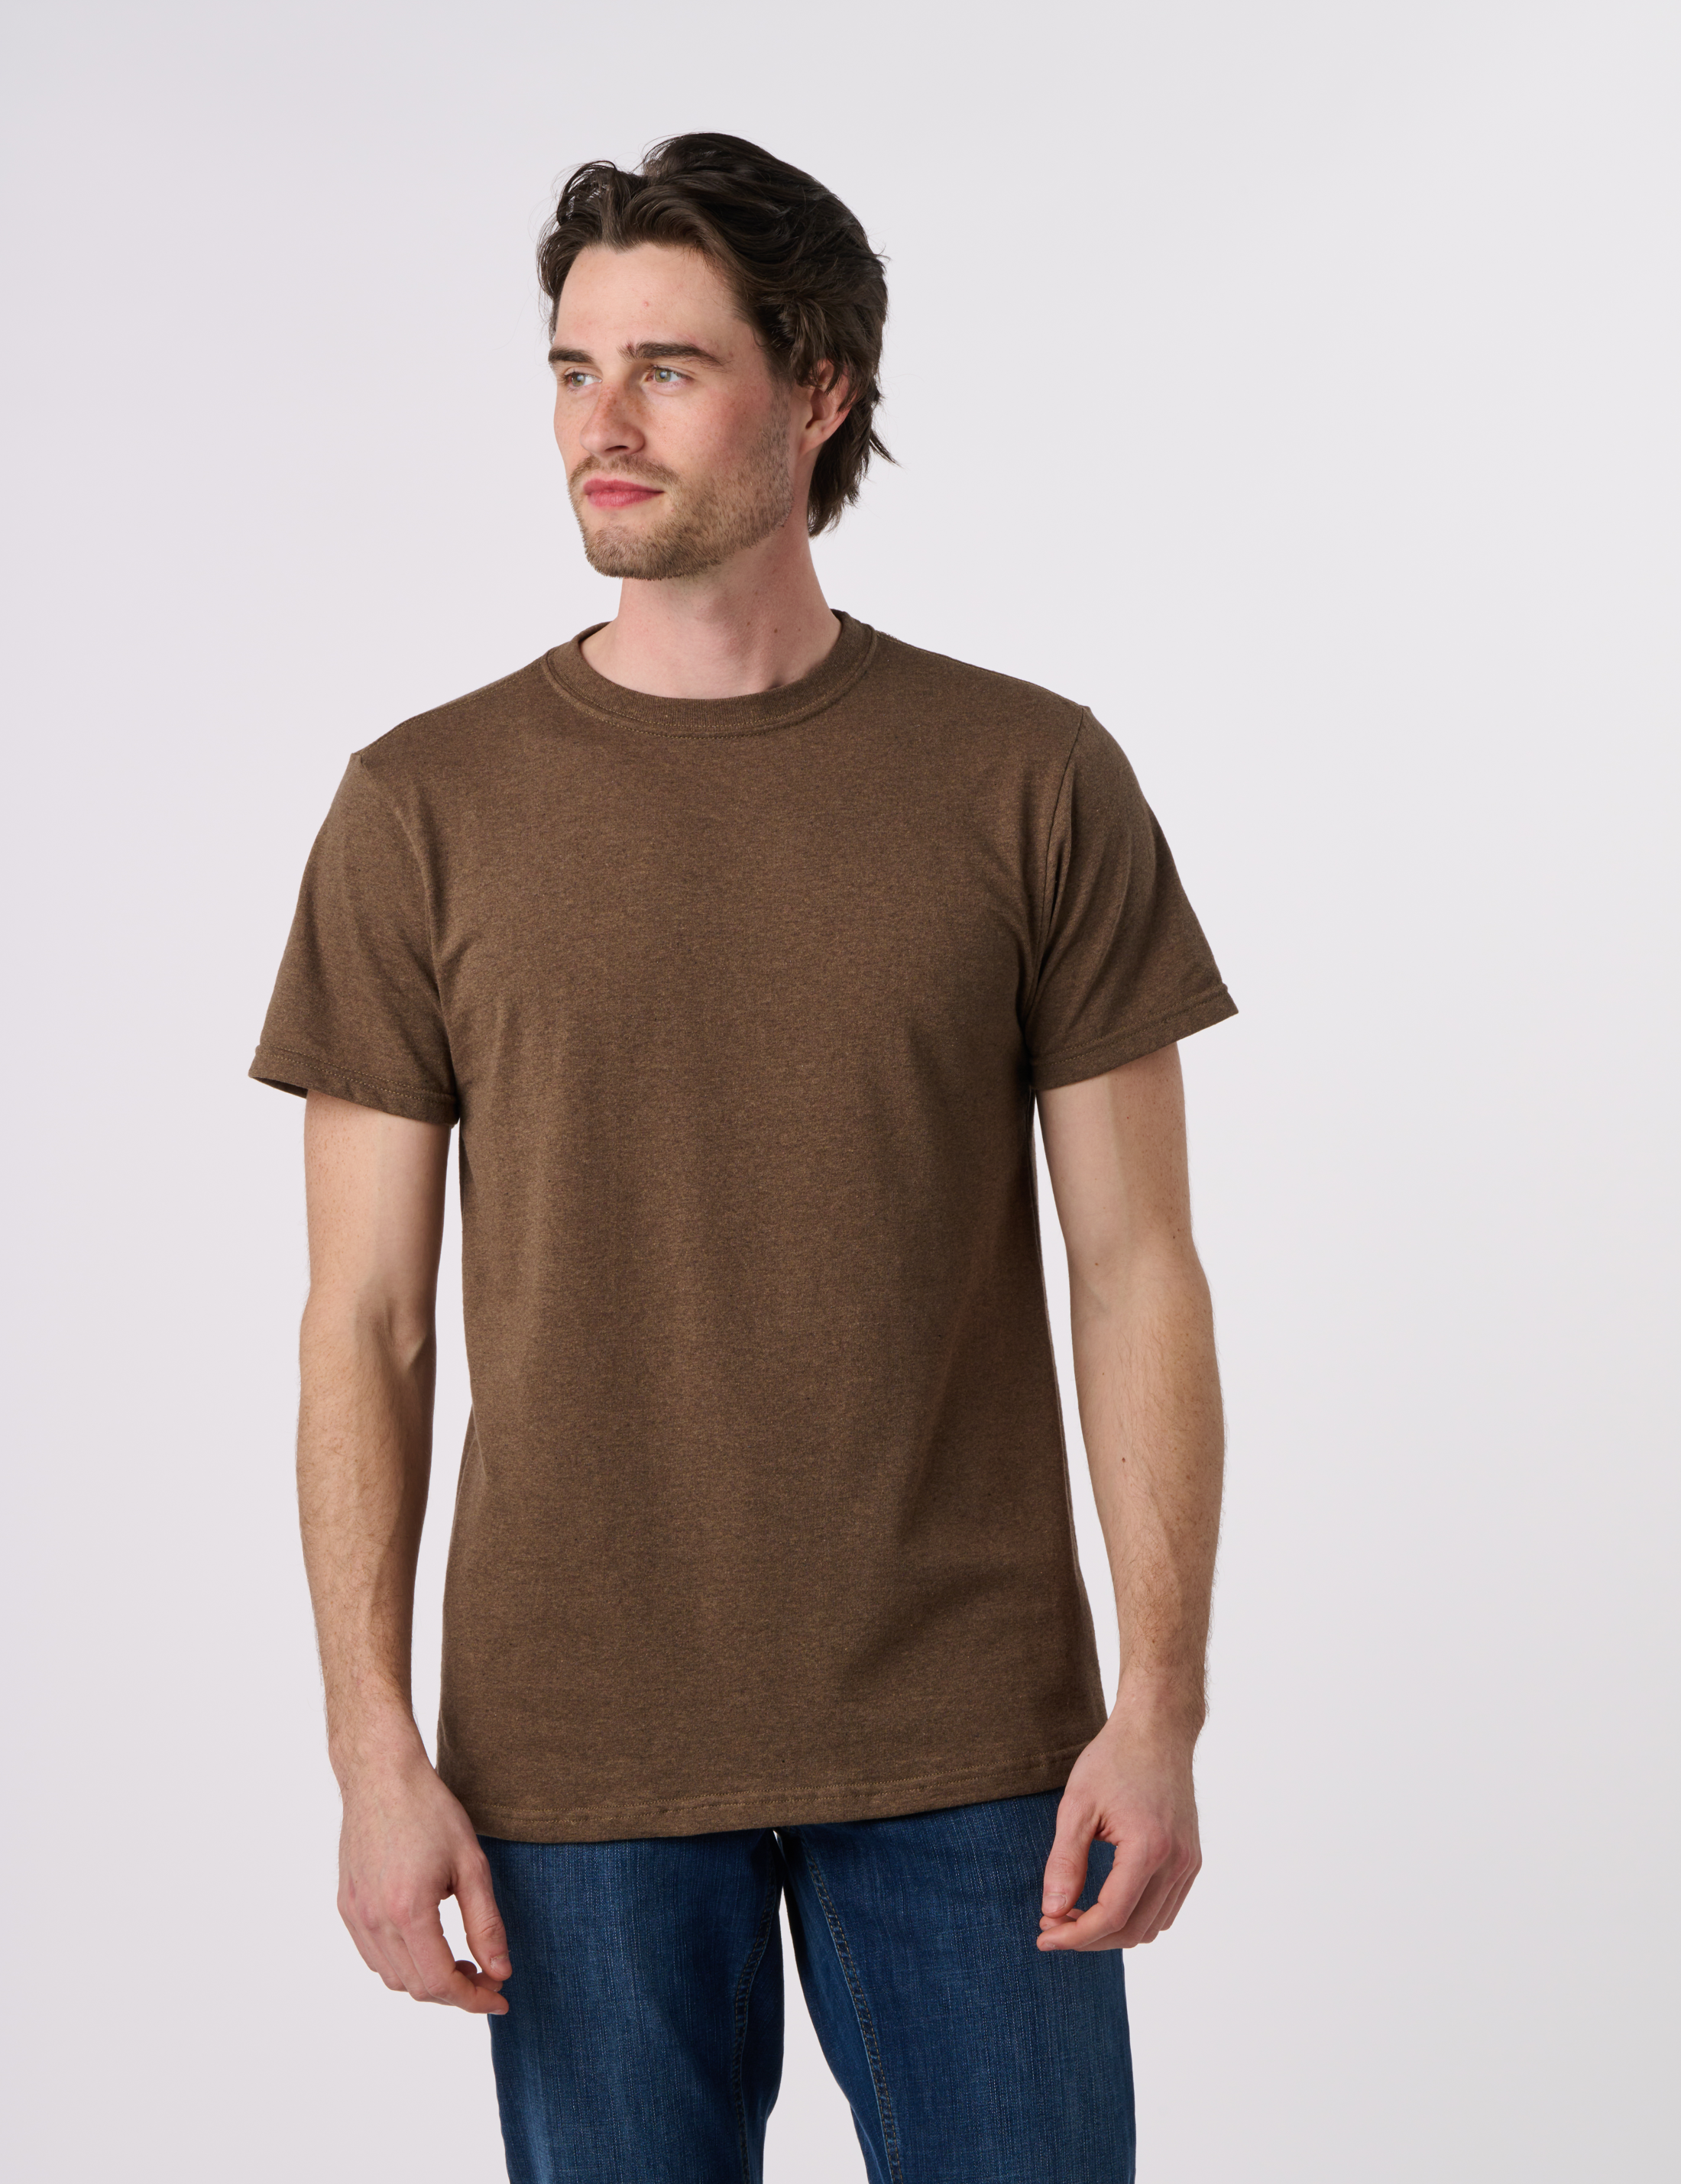 RS100 - Classic Short Sleeve T-Shirt